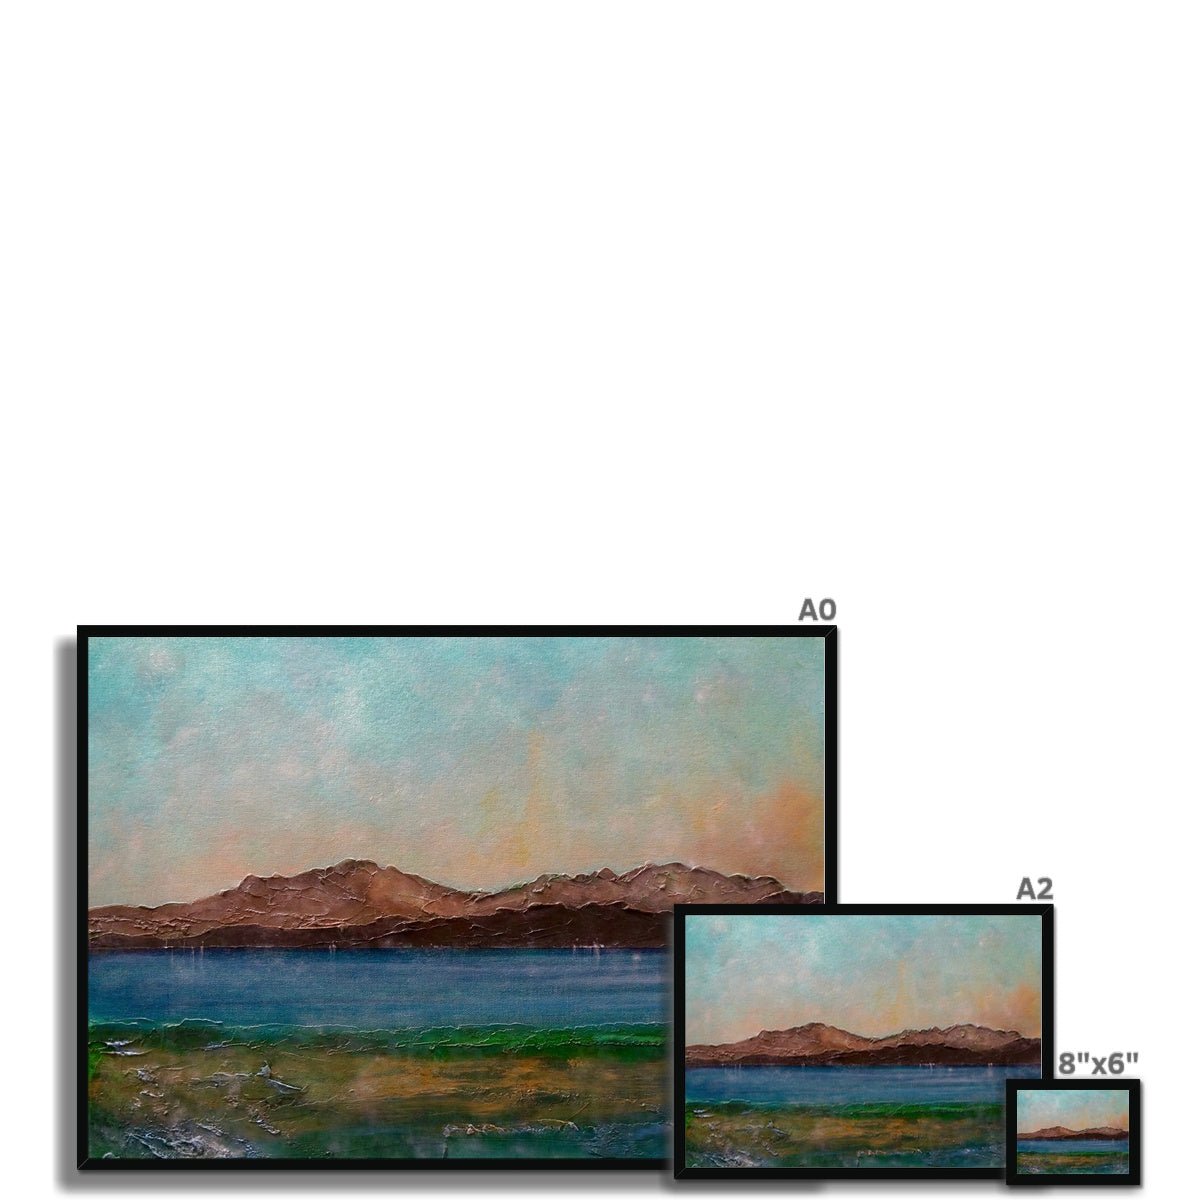 Arran From Scalpsie Bay Painting | Framed Prints From Scotland-Framed Prints-Arran Art Gallery-Paintings, Prints, Homeware, Art Gifts From Scotland By Scottish Artist Kevin Hunter